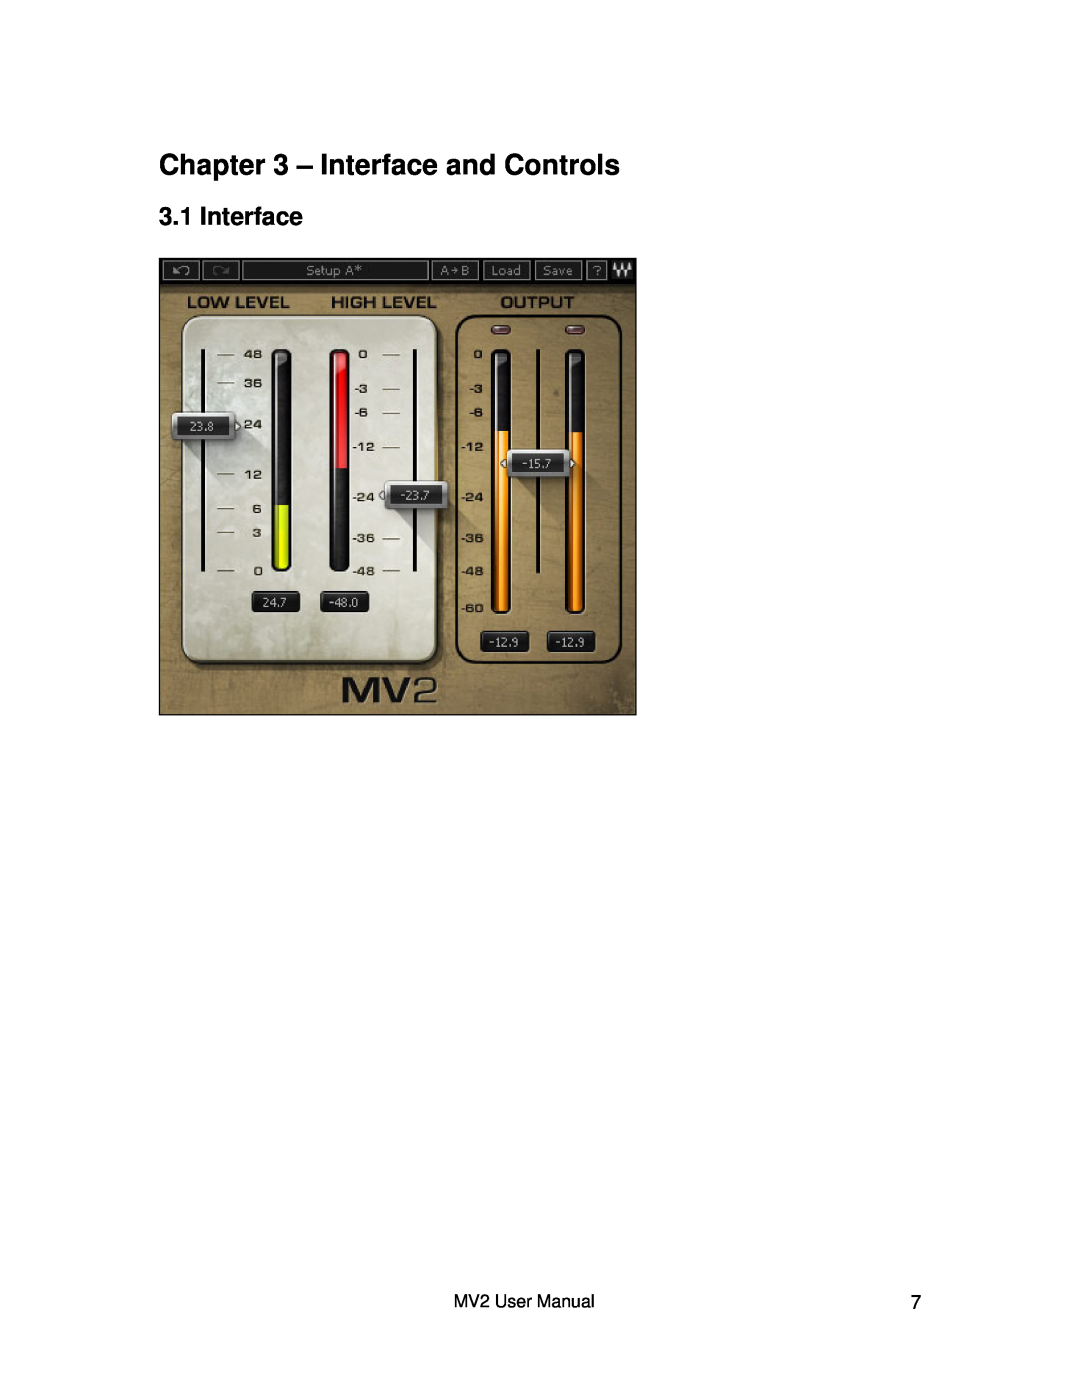 Waves user manual Interface and Controls, MV2 User Manual 